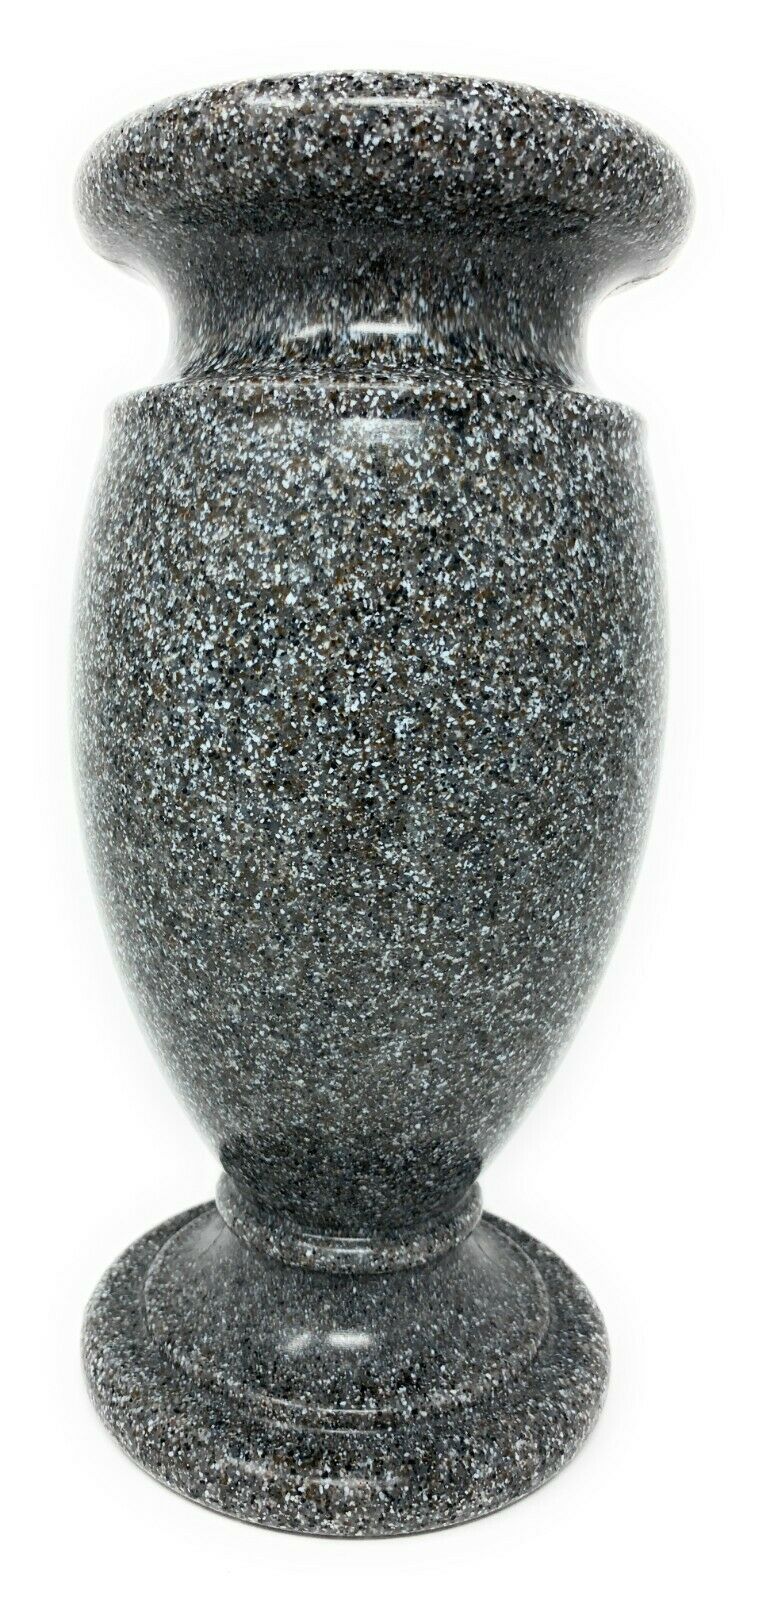 Optimum Memorial Cemetery Greek Flower Vase, Simulated Black Granite, Plastic